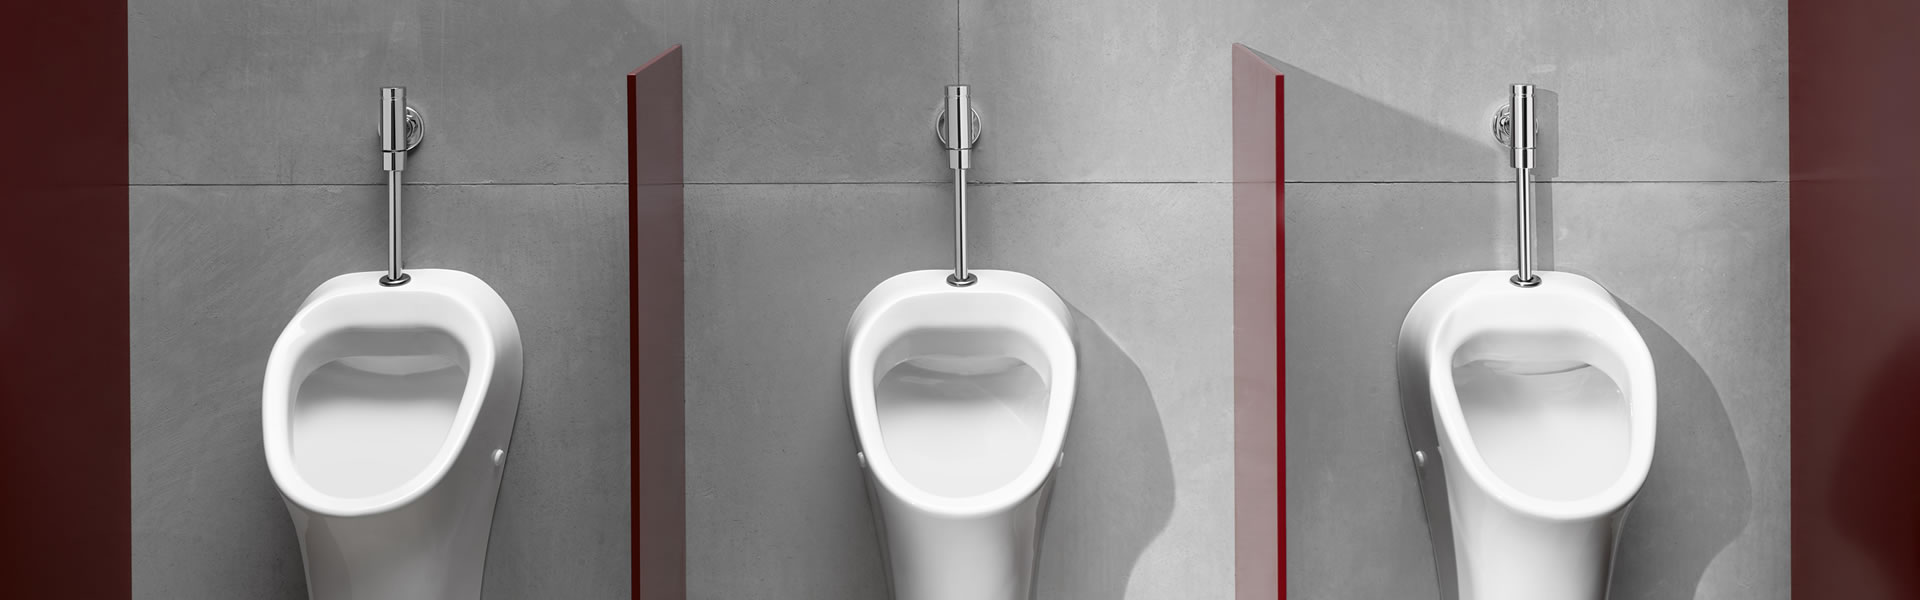 urinal_header